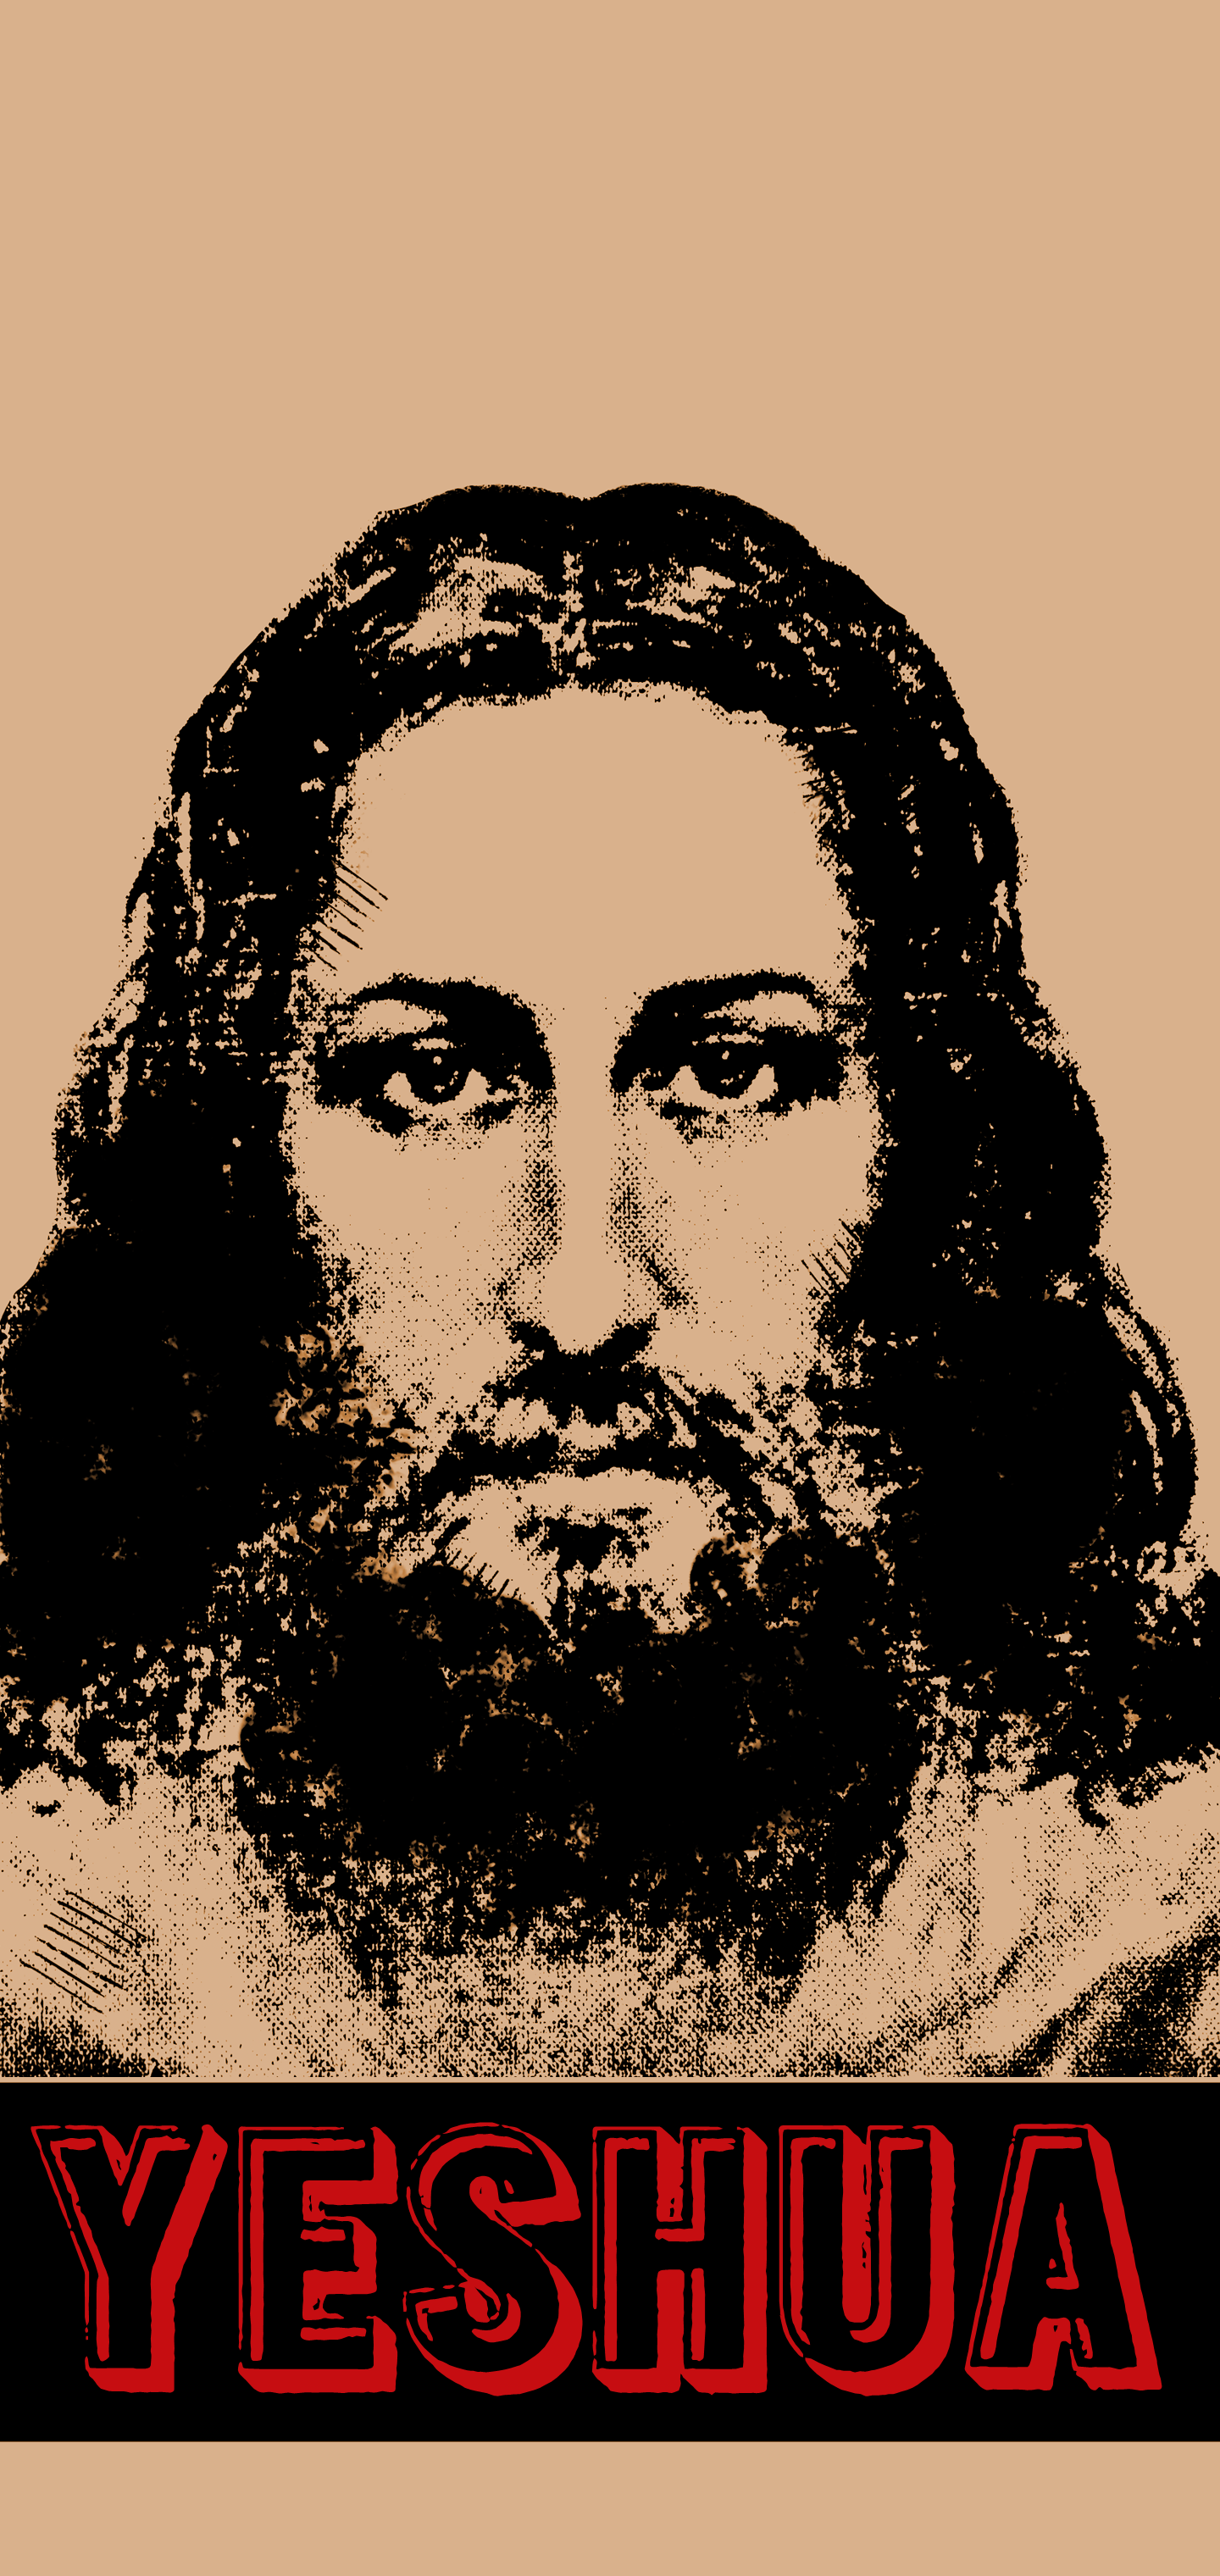 General 1440x3041 Jesus Christ face men beard portrait display looking at viewer religion